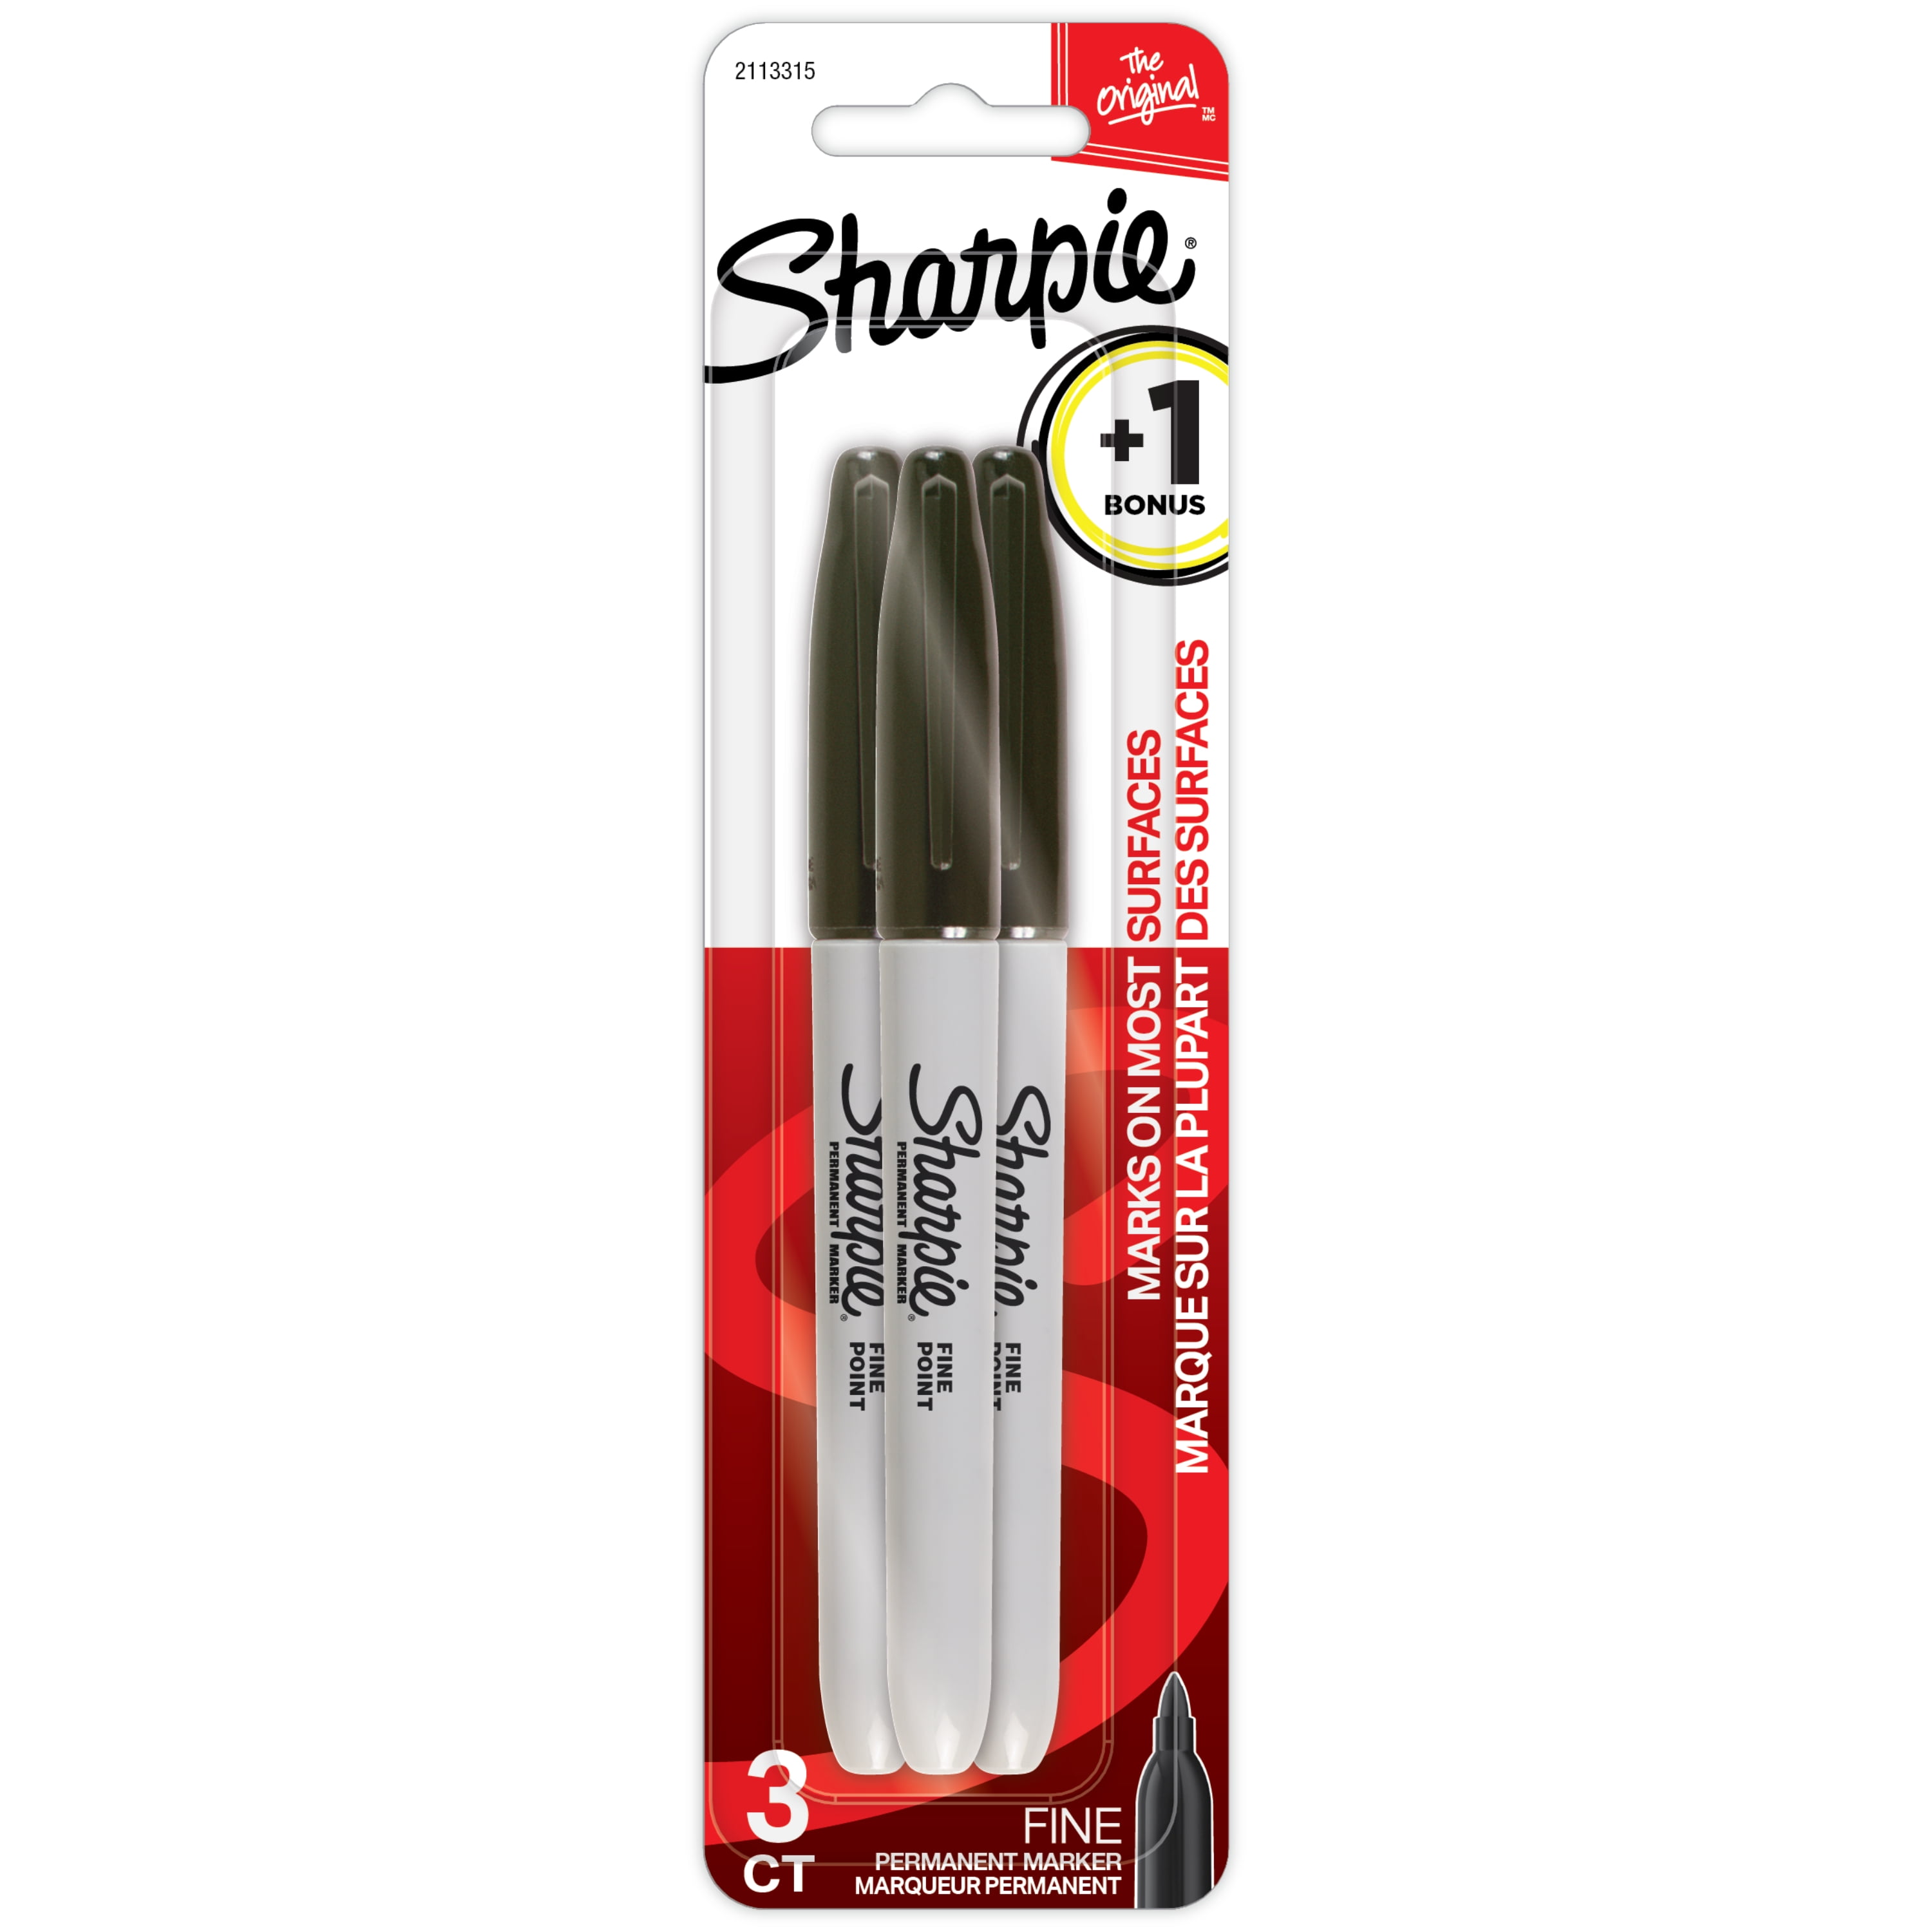 Sharpie Permanent Markers, Fine Point, Black, 2 Count 